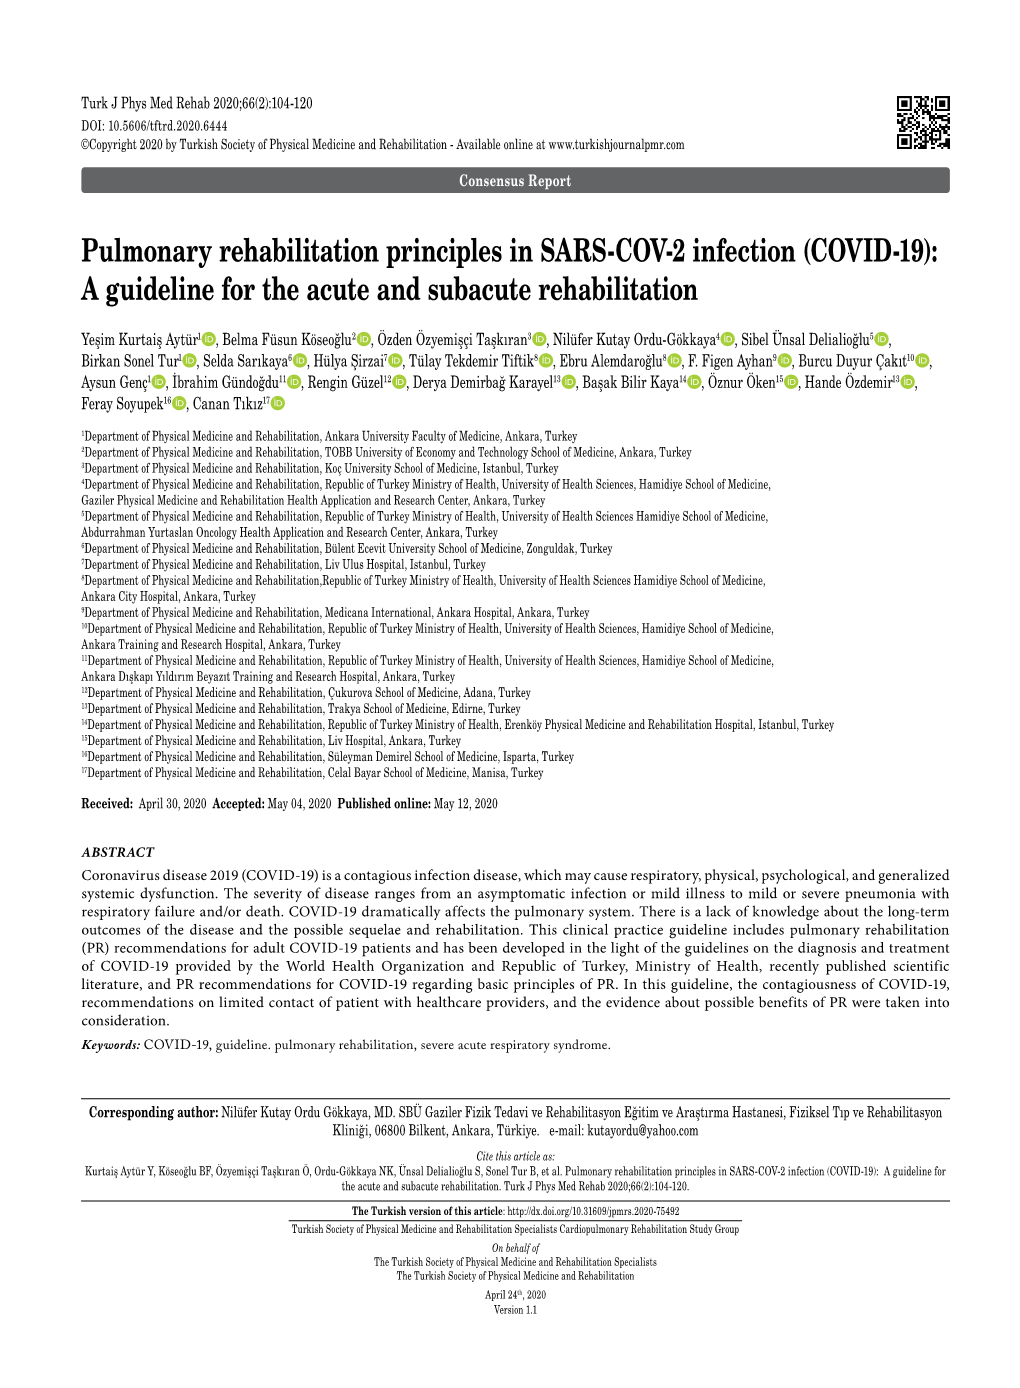 Pulmonary Rehabilitation Principles in SARS-COV-2 Infection (COVID-19): a Guideline for the Acute and Subacute Rehabilitation